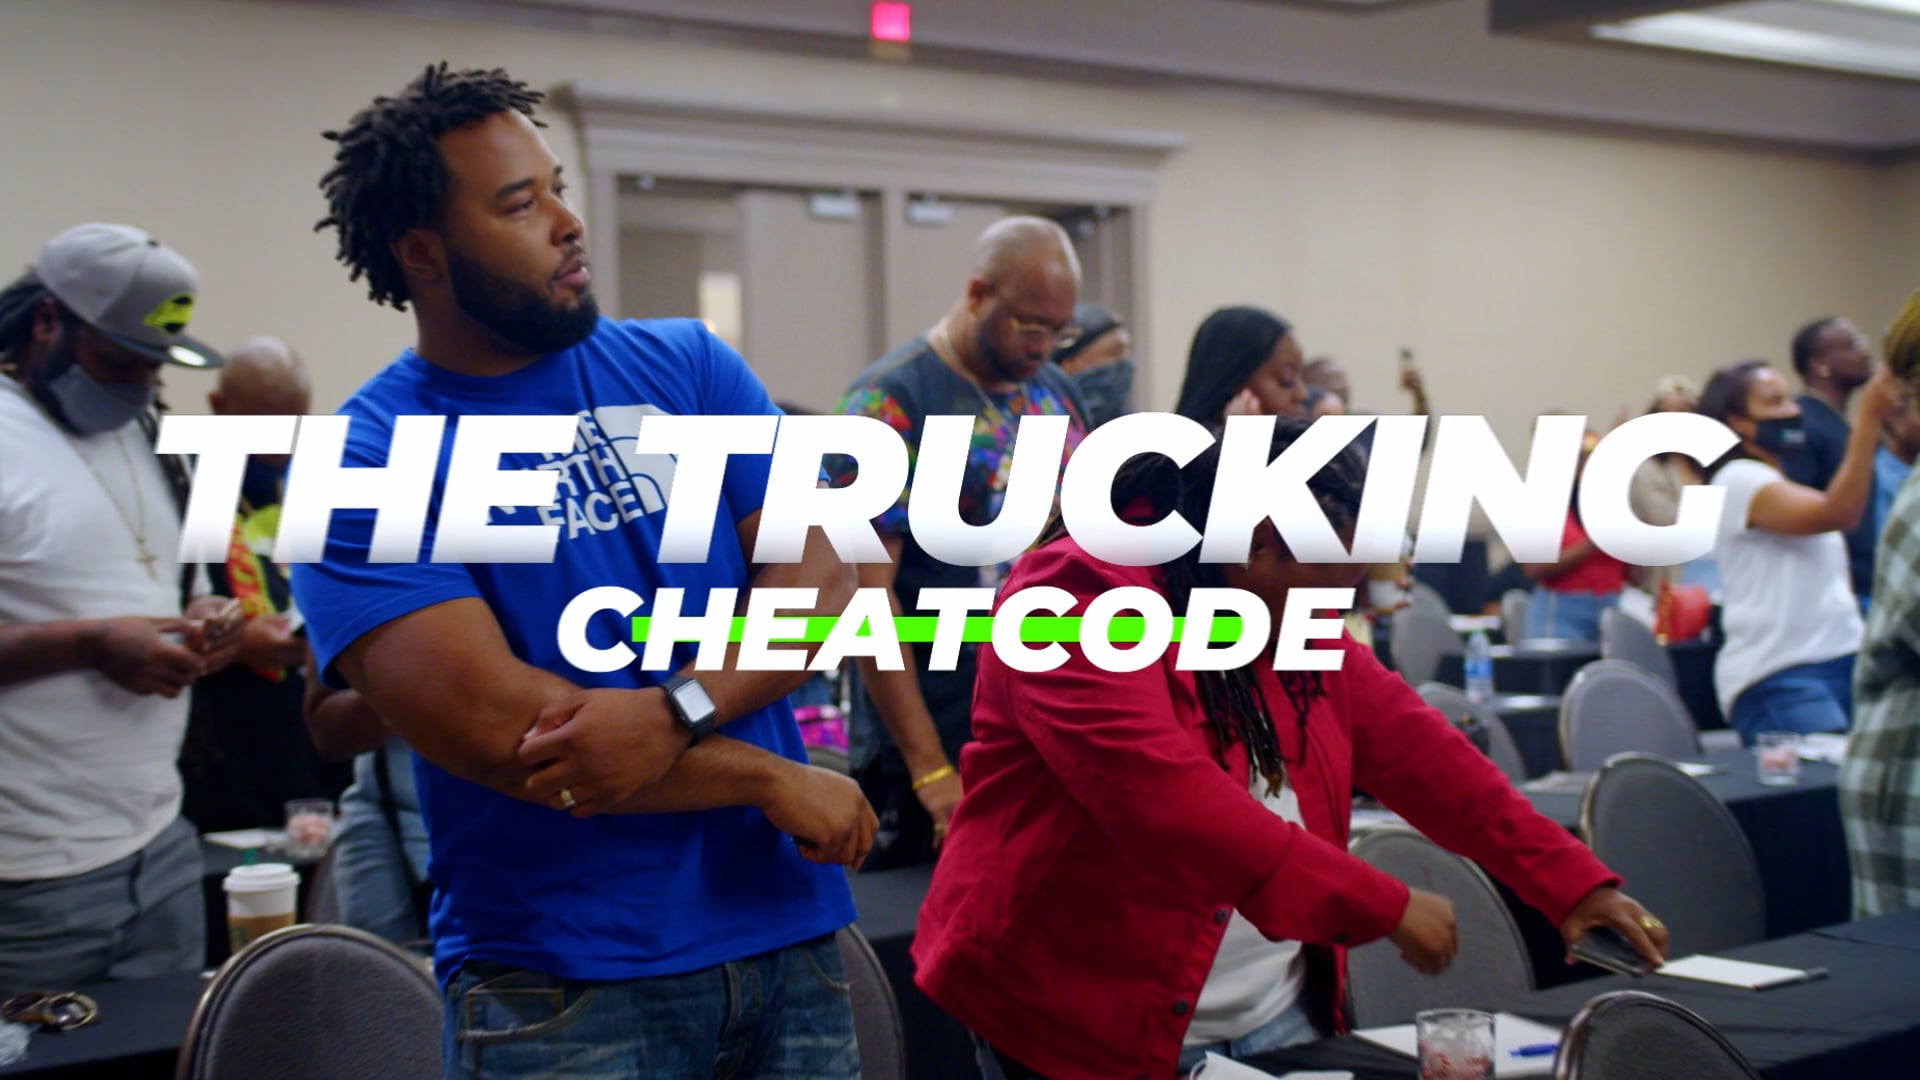 Trucking Cheat Code - Event Promo Video